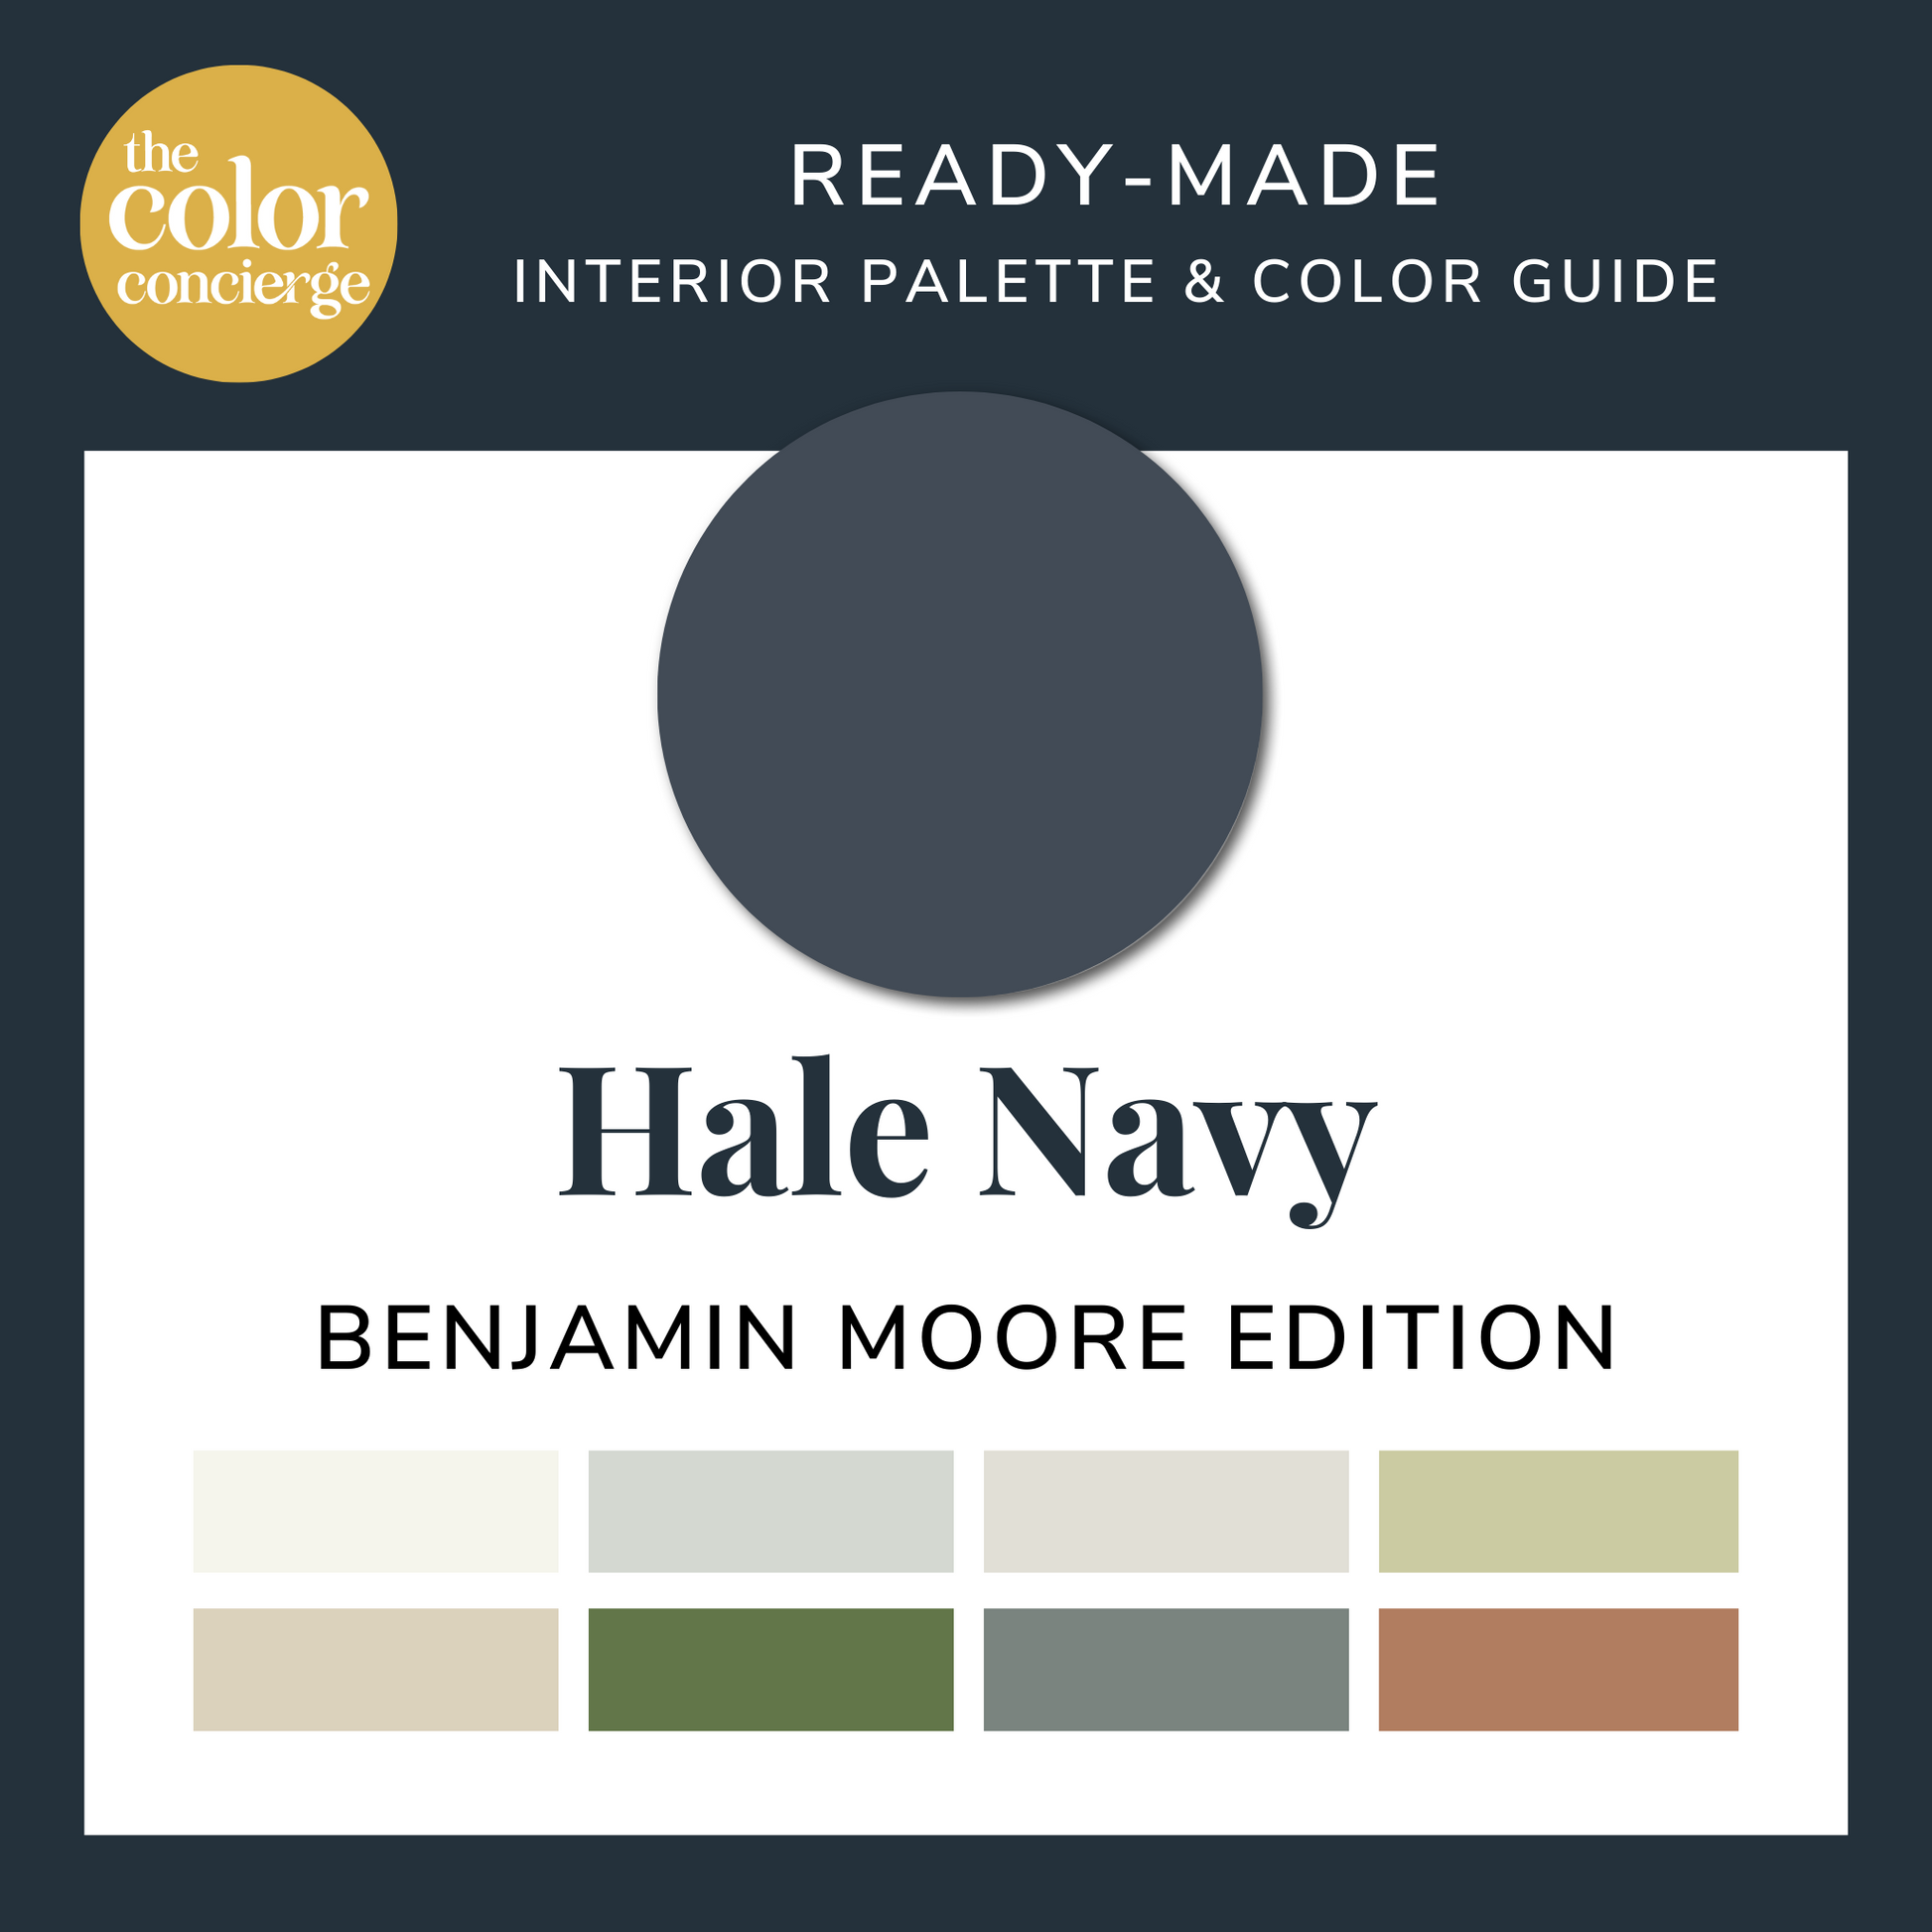 Benjamin Moore Hale Navy color palette guide